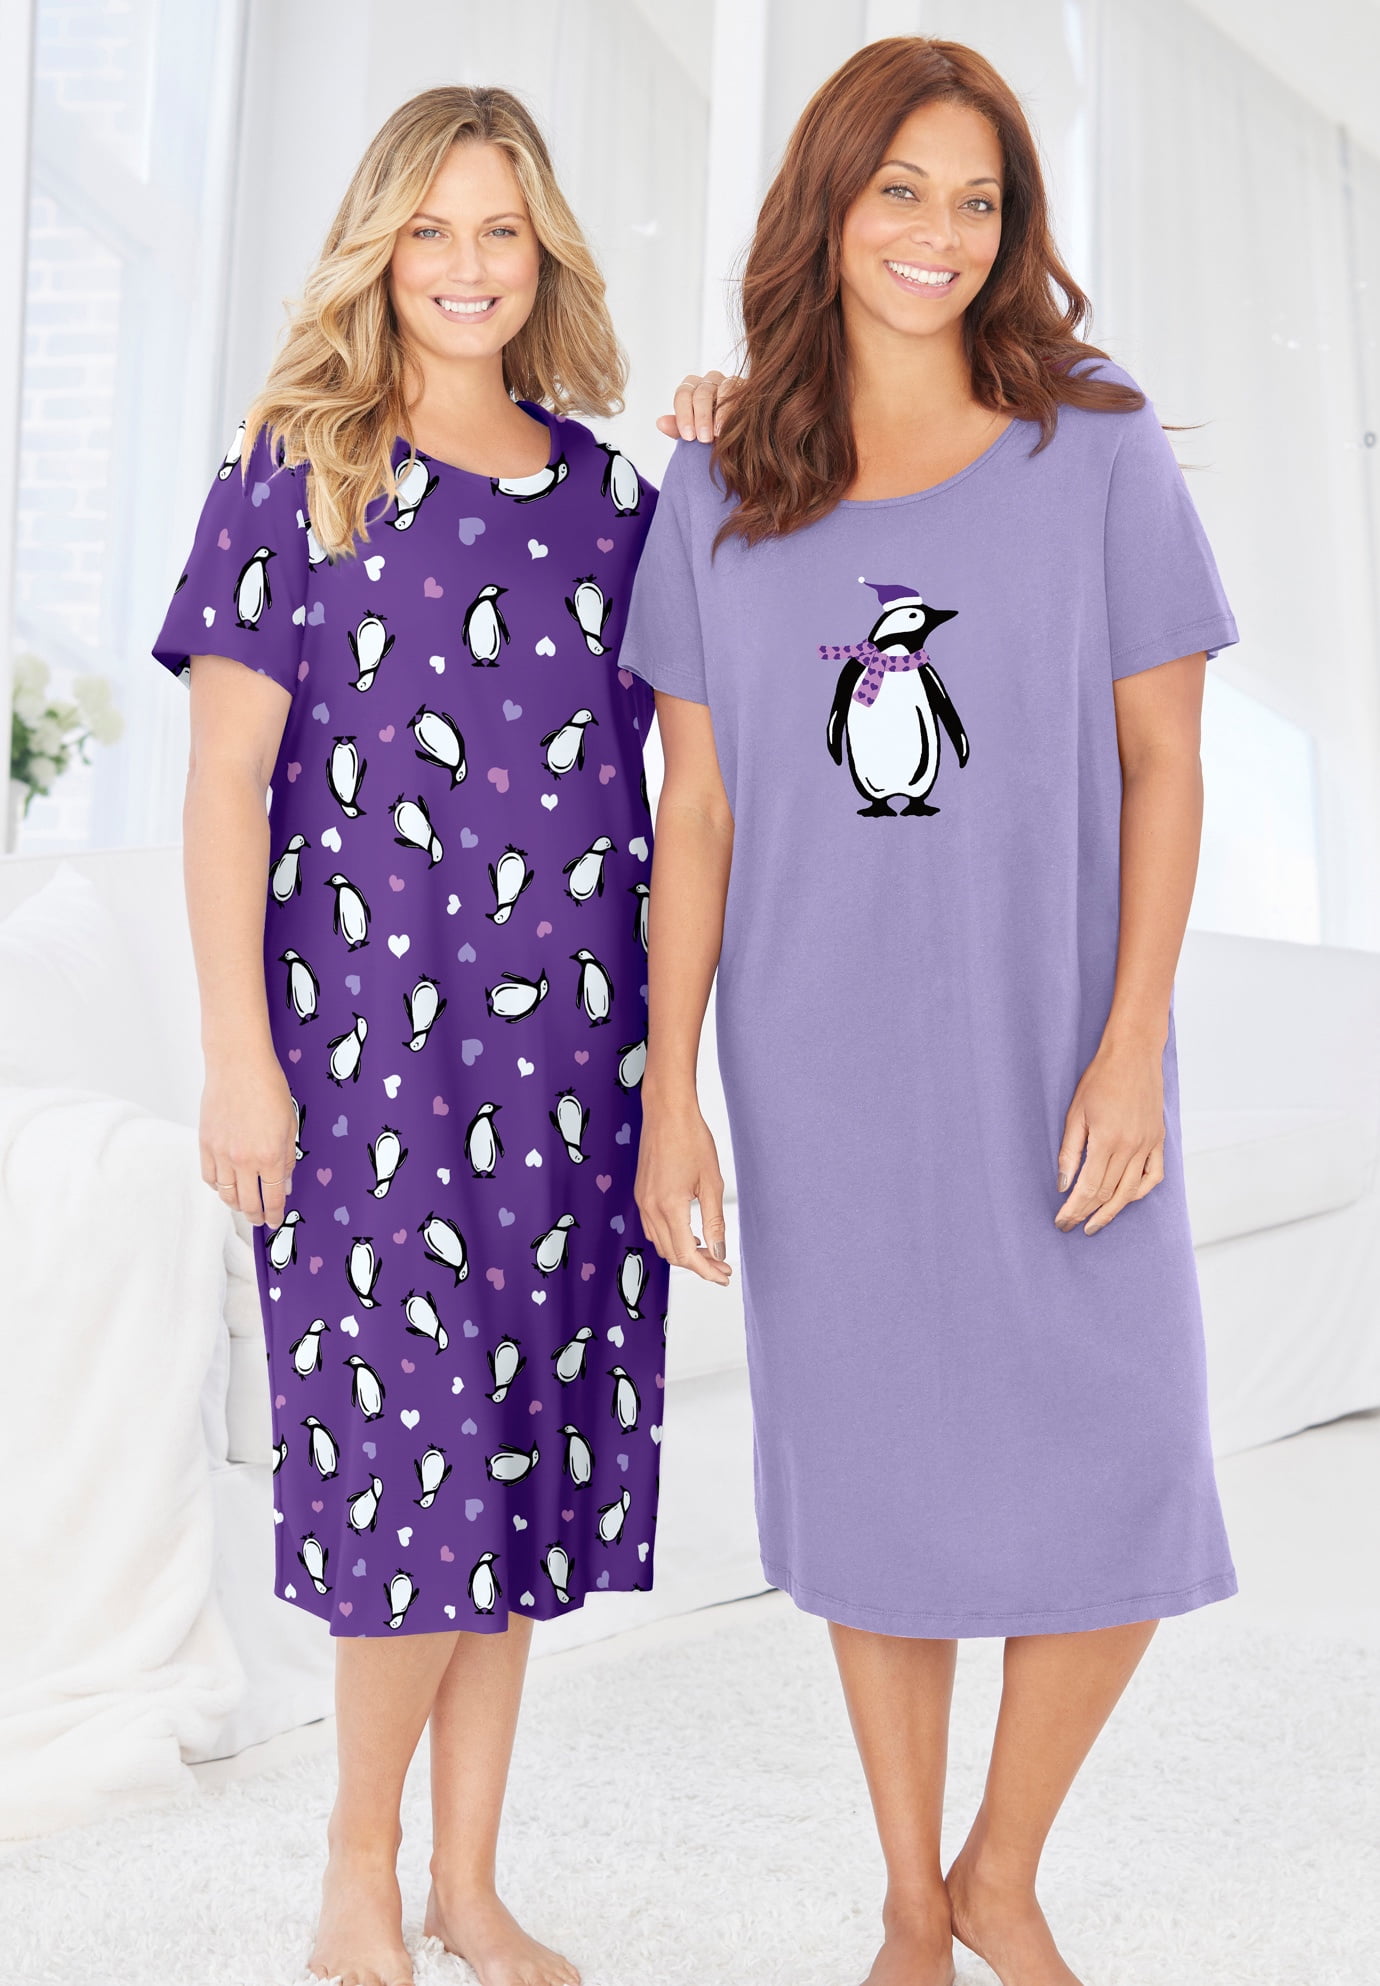 Dreams & Co. Women's Plus Size 2-Pack Long Sleepshirts Nightgown